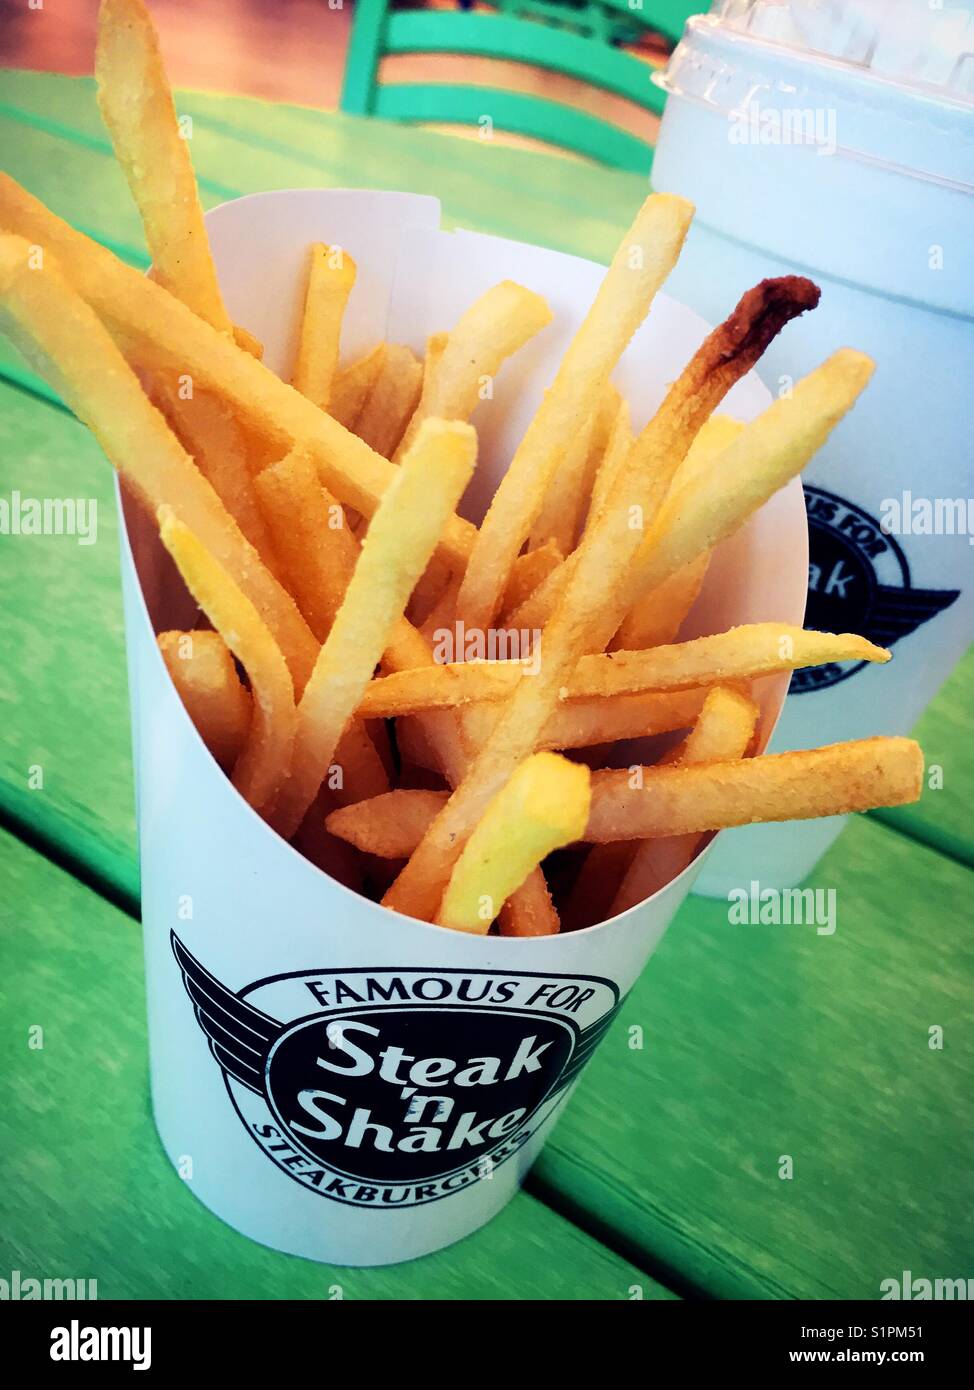 steak and Shake French fries,USA Stock Photo - Alamy